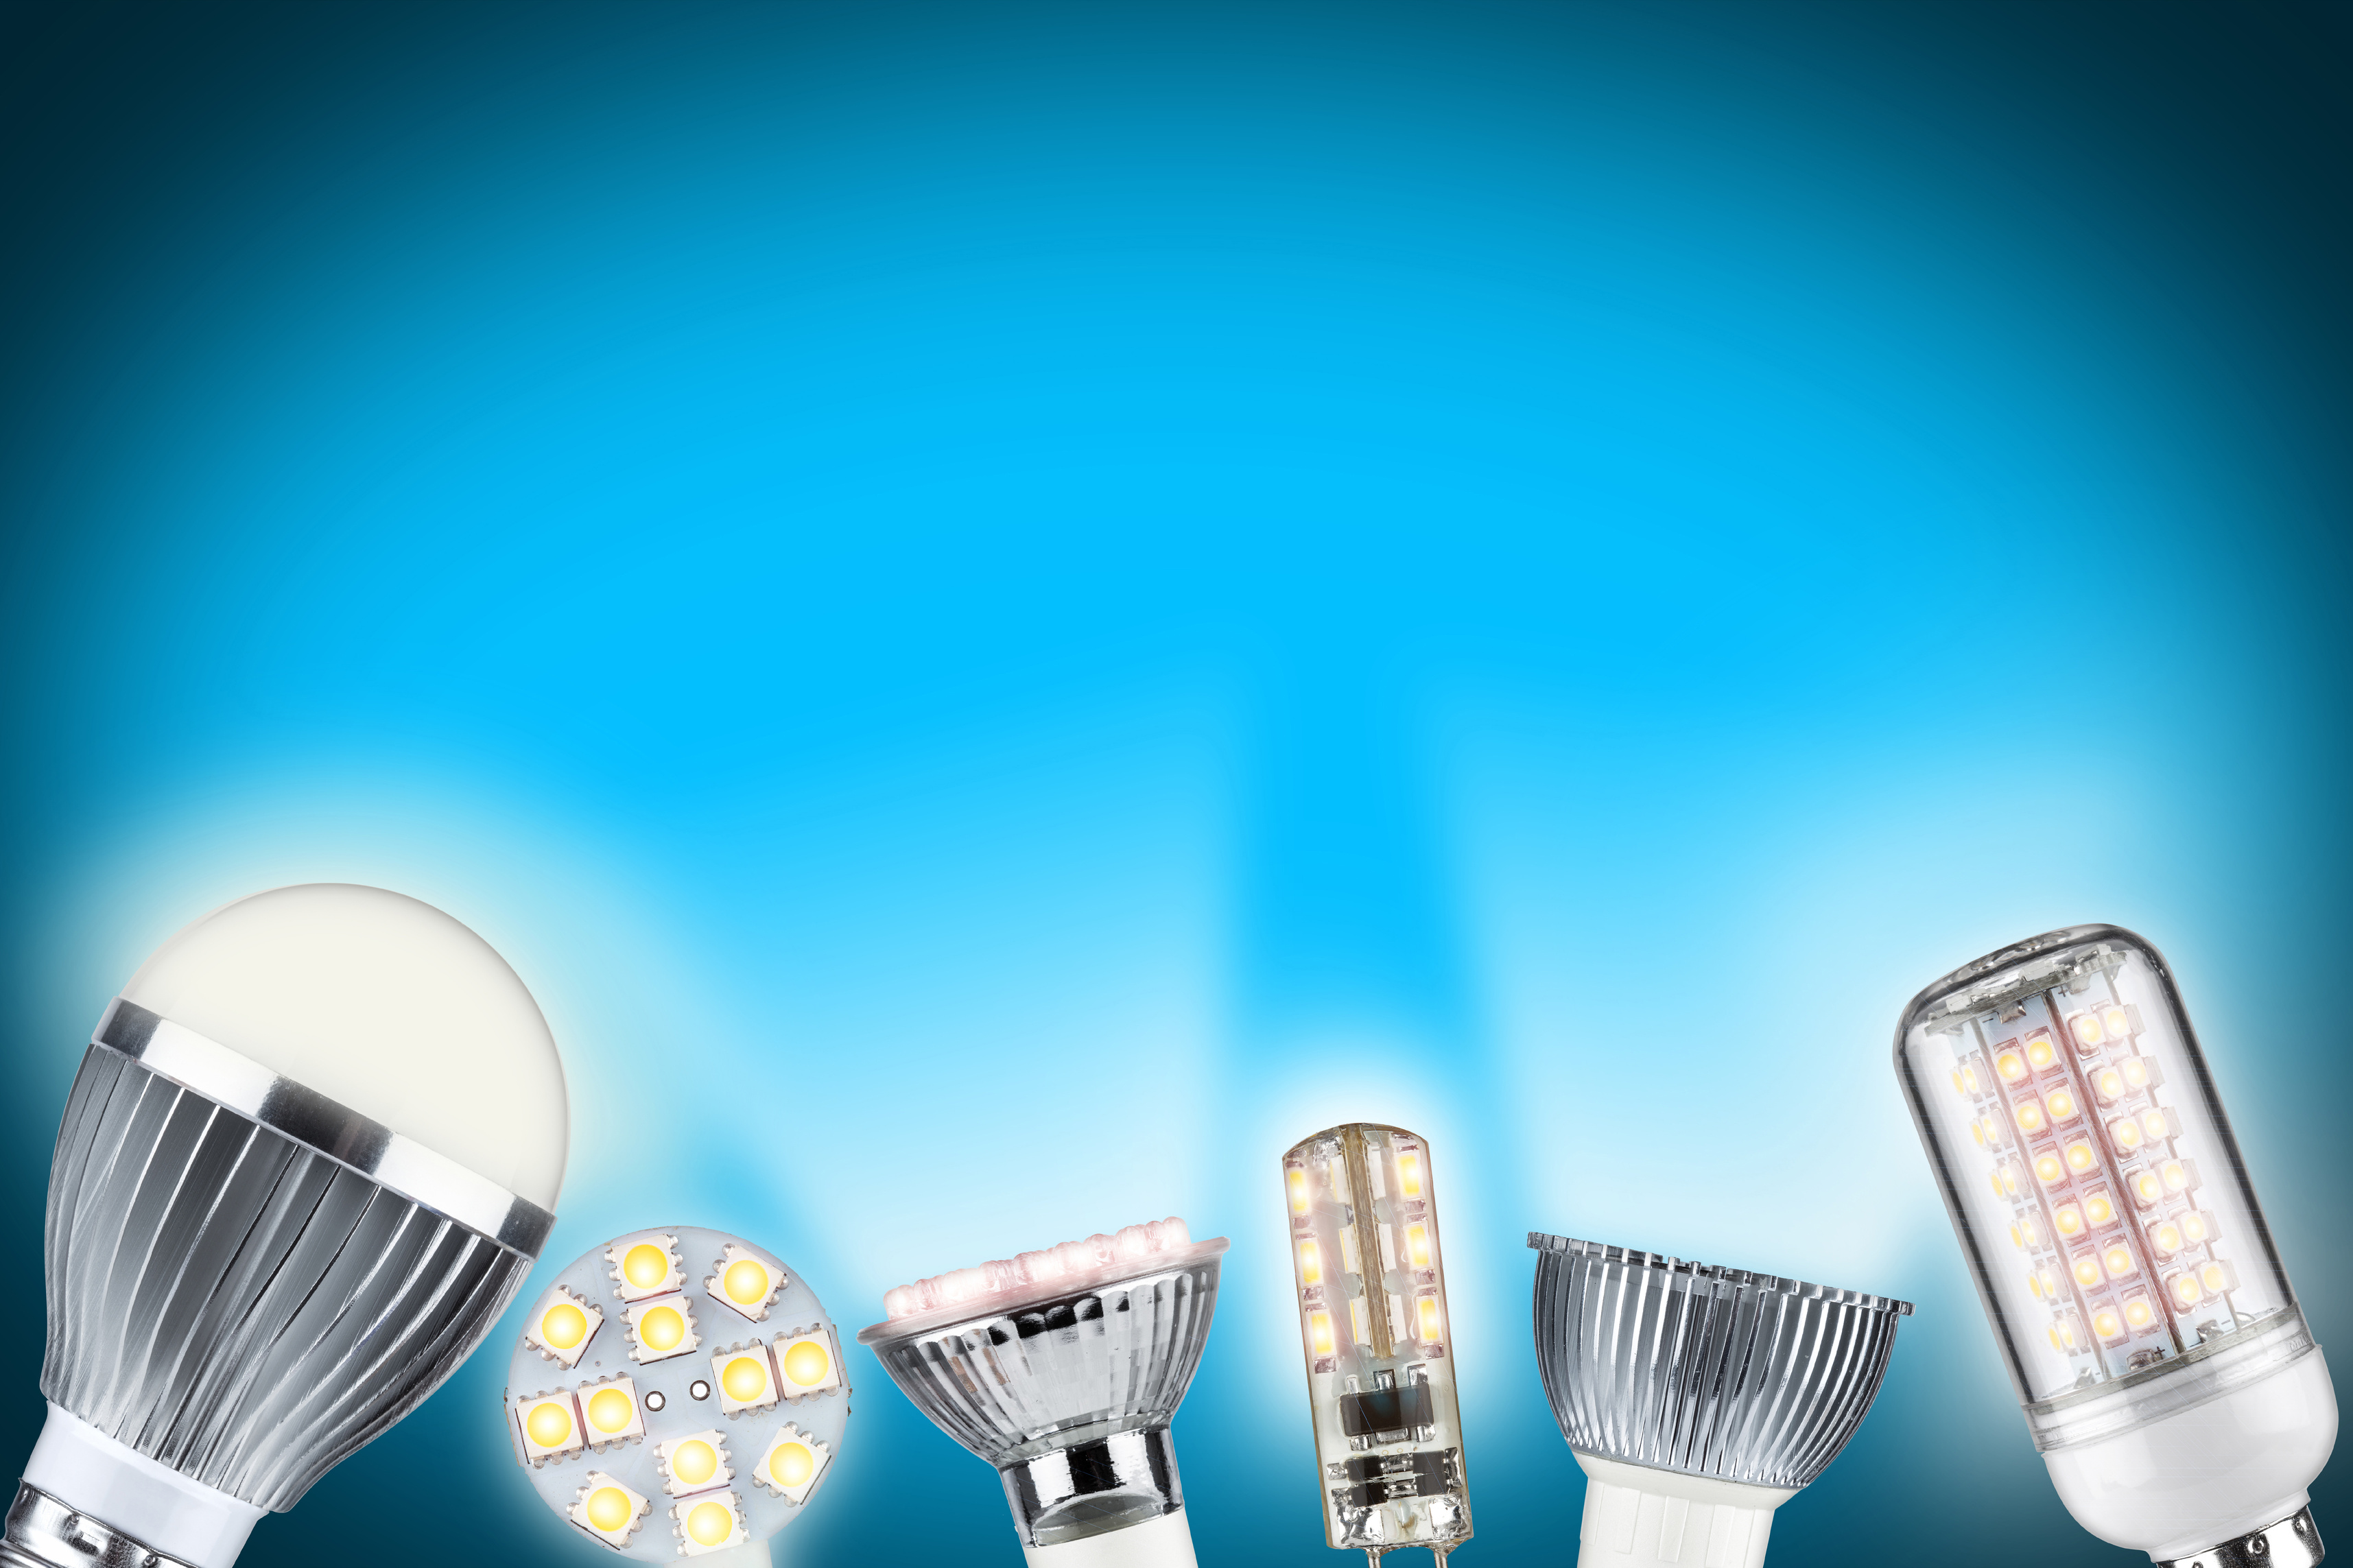 LED light concept